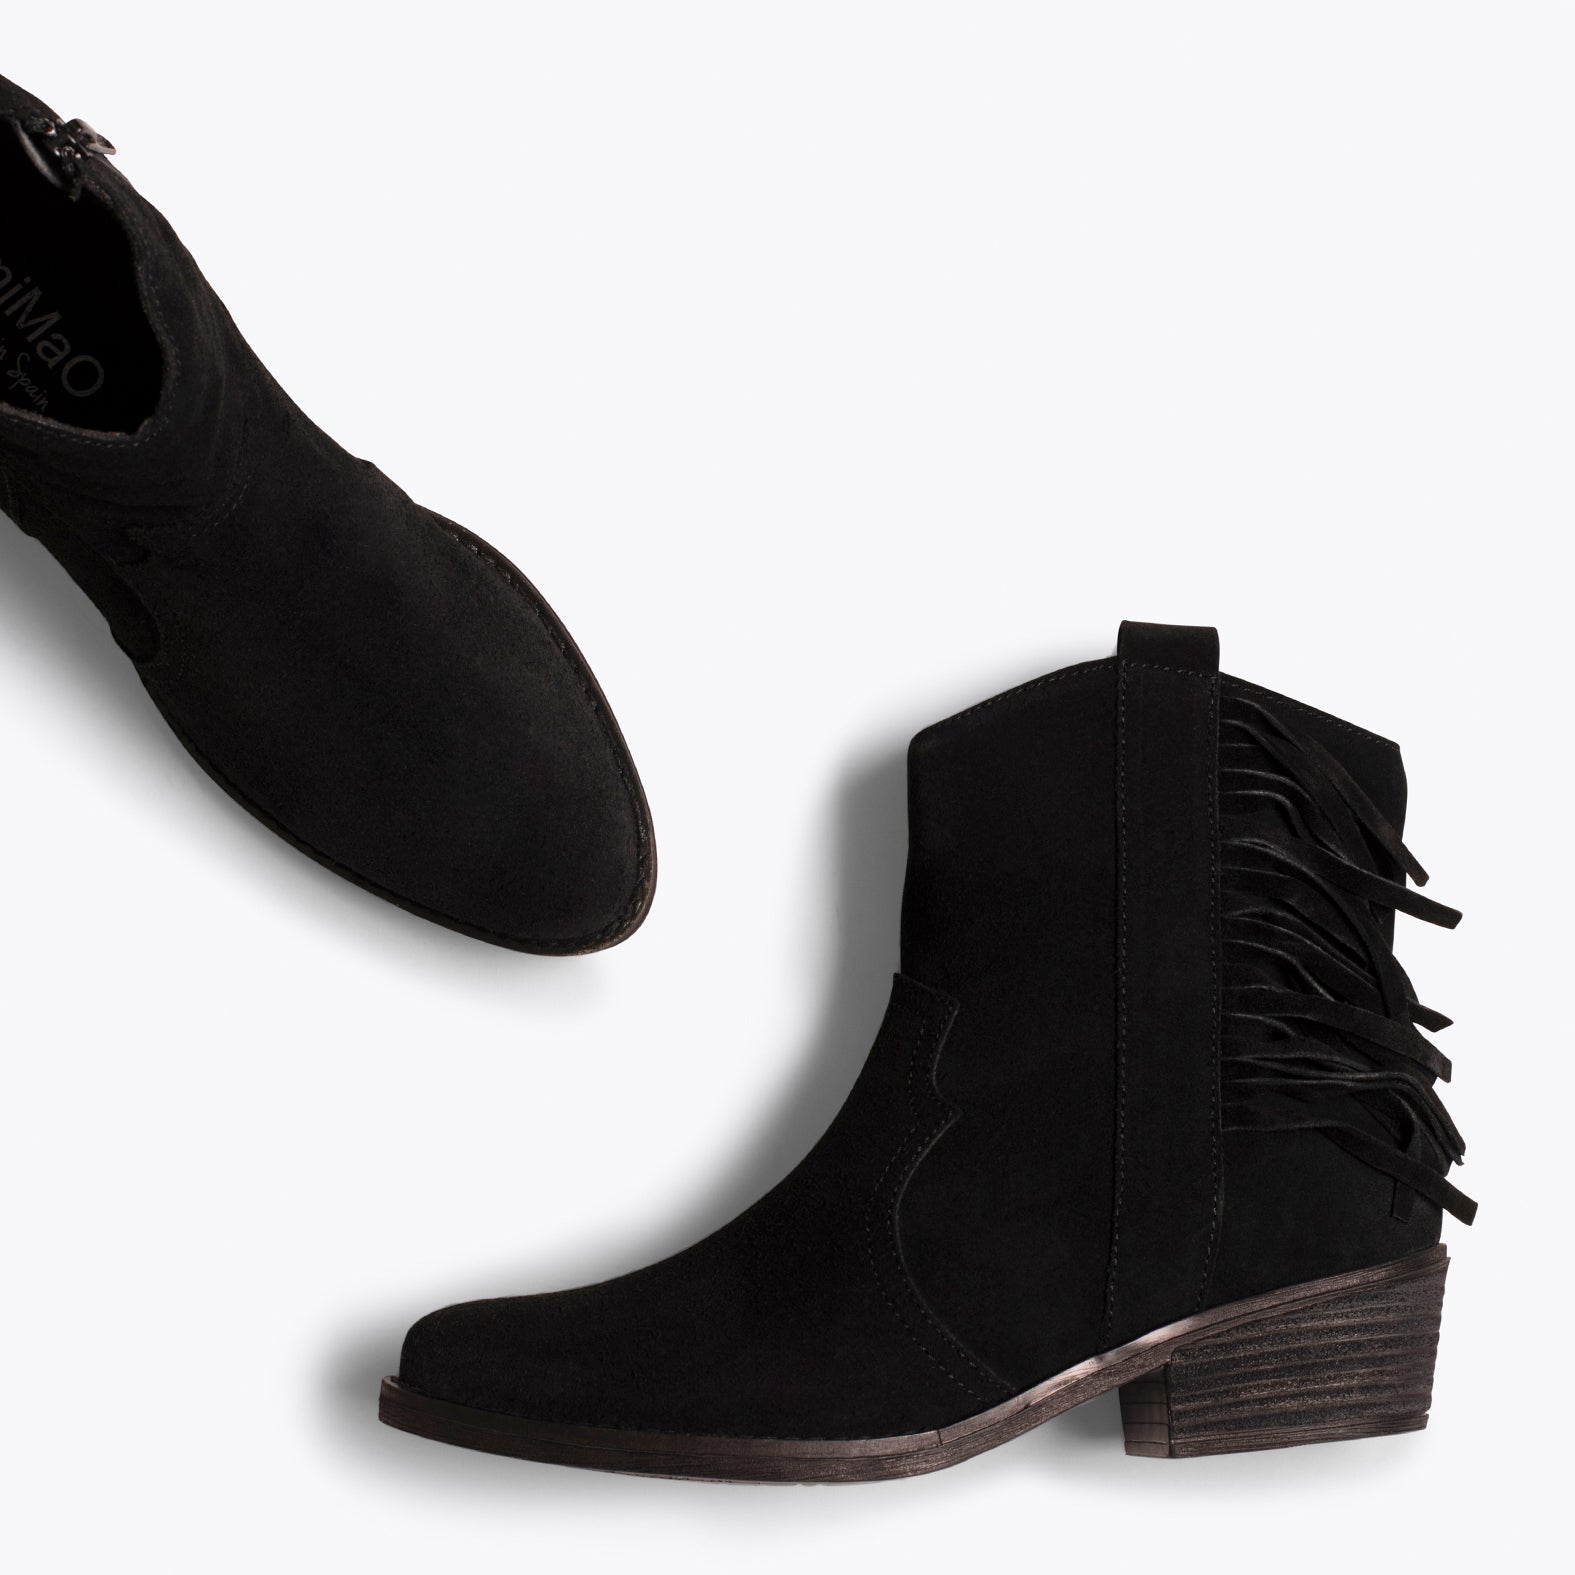 BOHO – BLACK low heel bootie with fringes